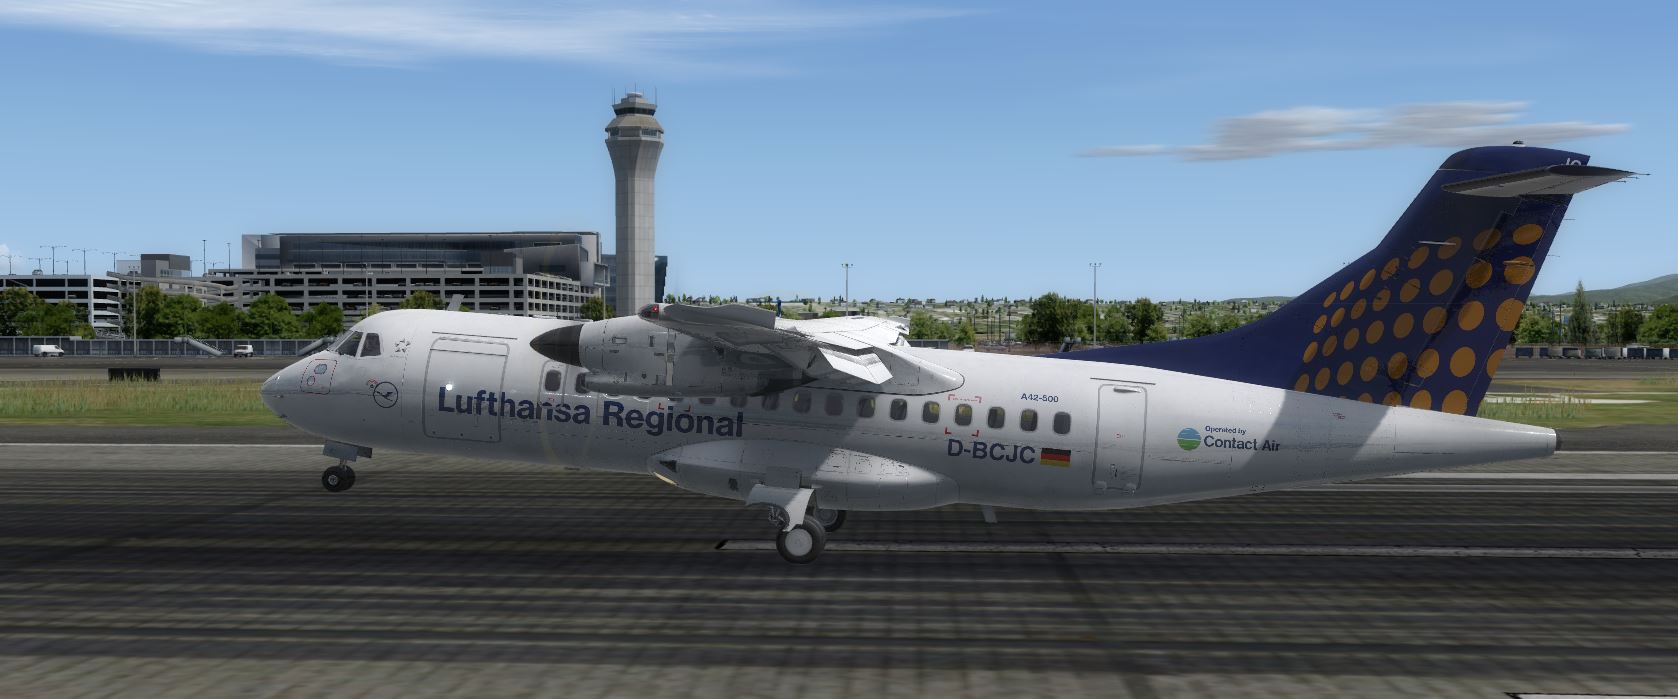 ATR42-500 Lufthansa-329 